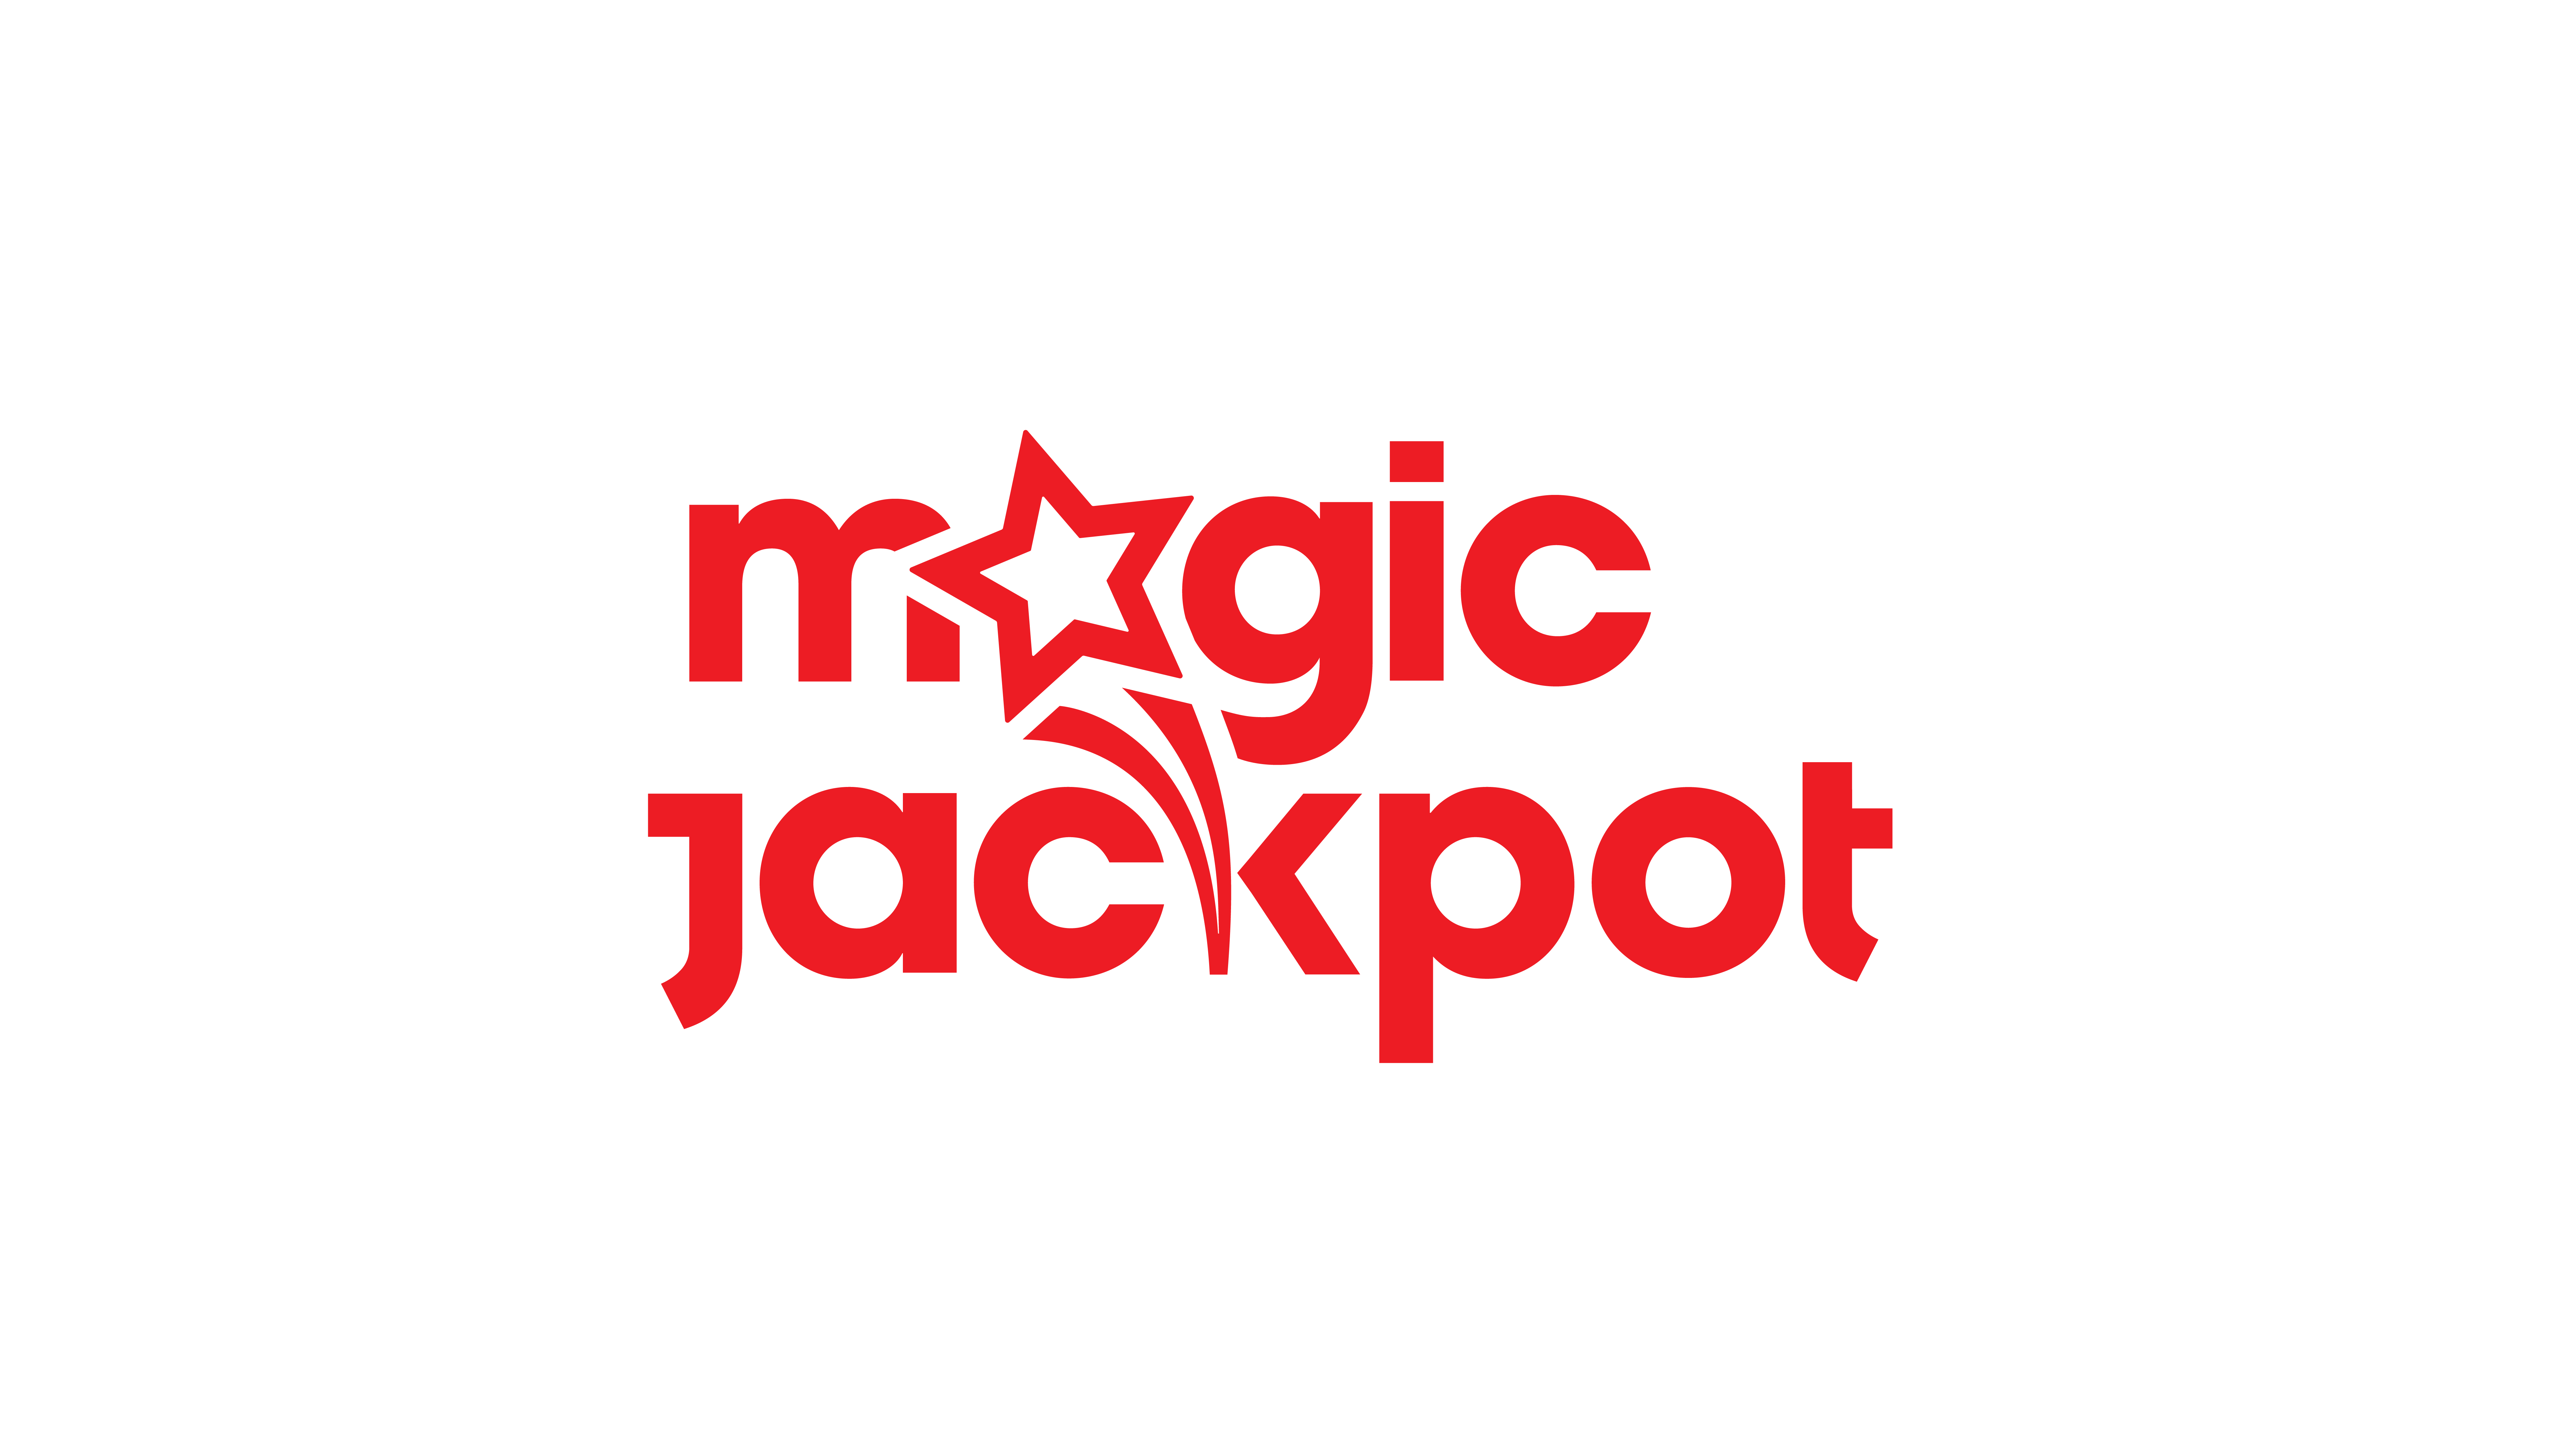 Magic Jackpot Logo